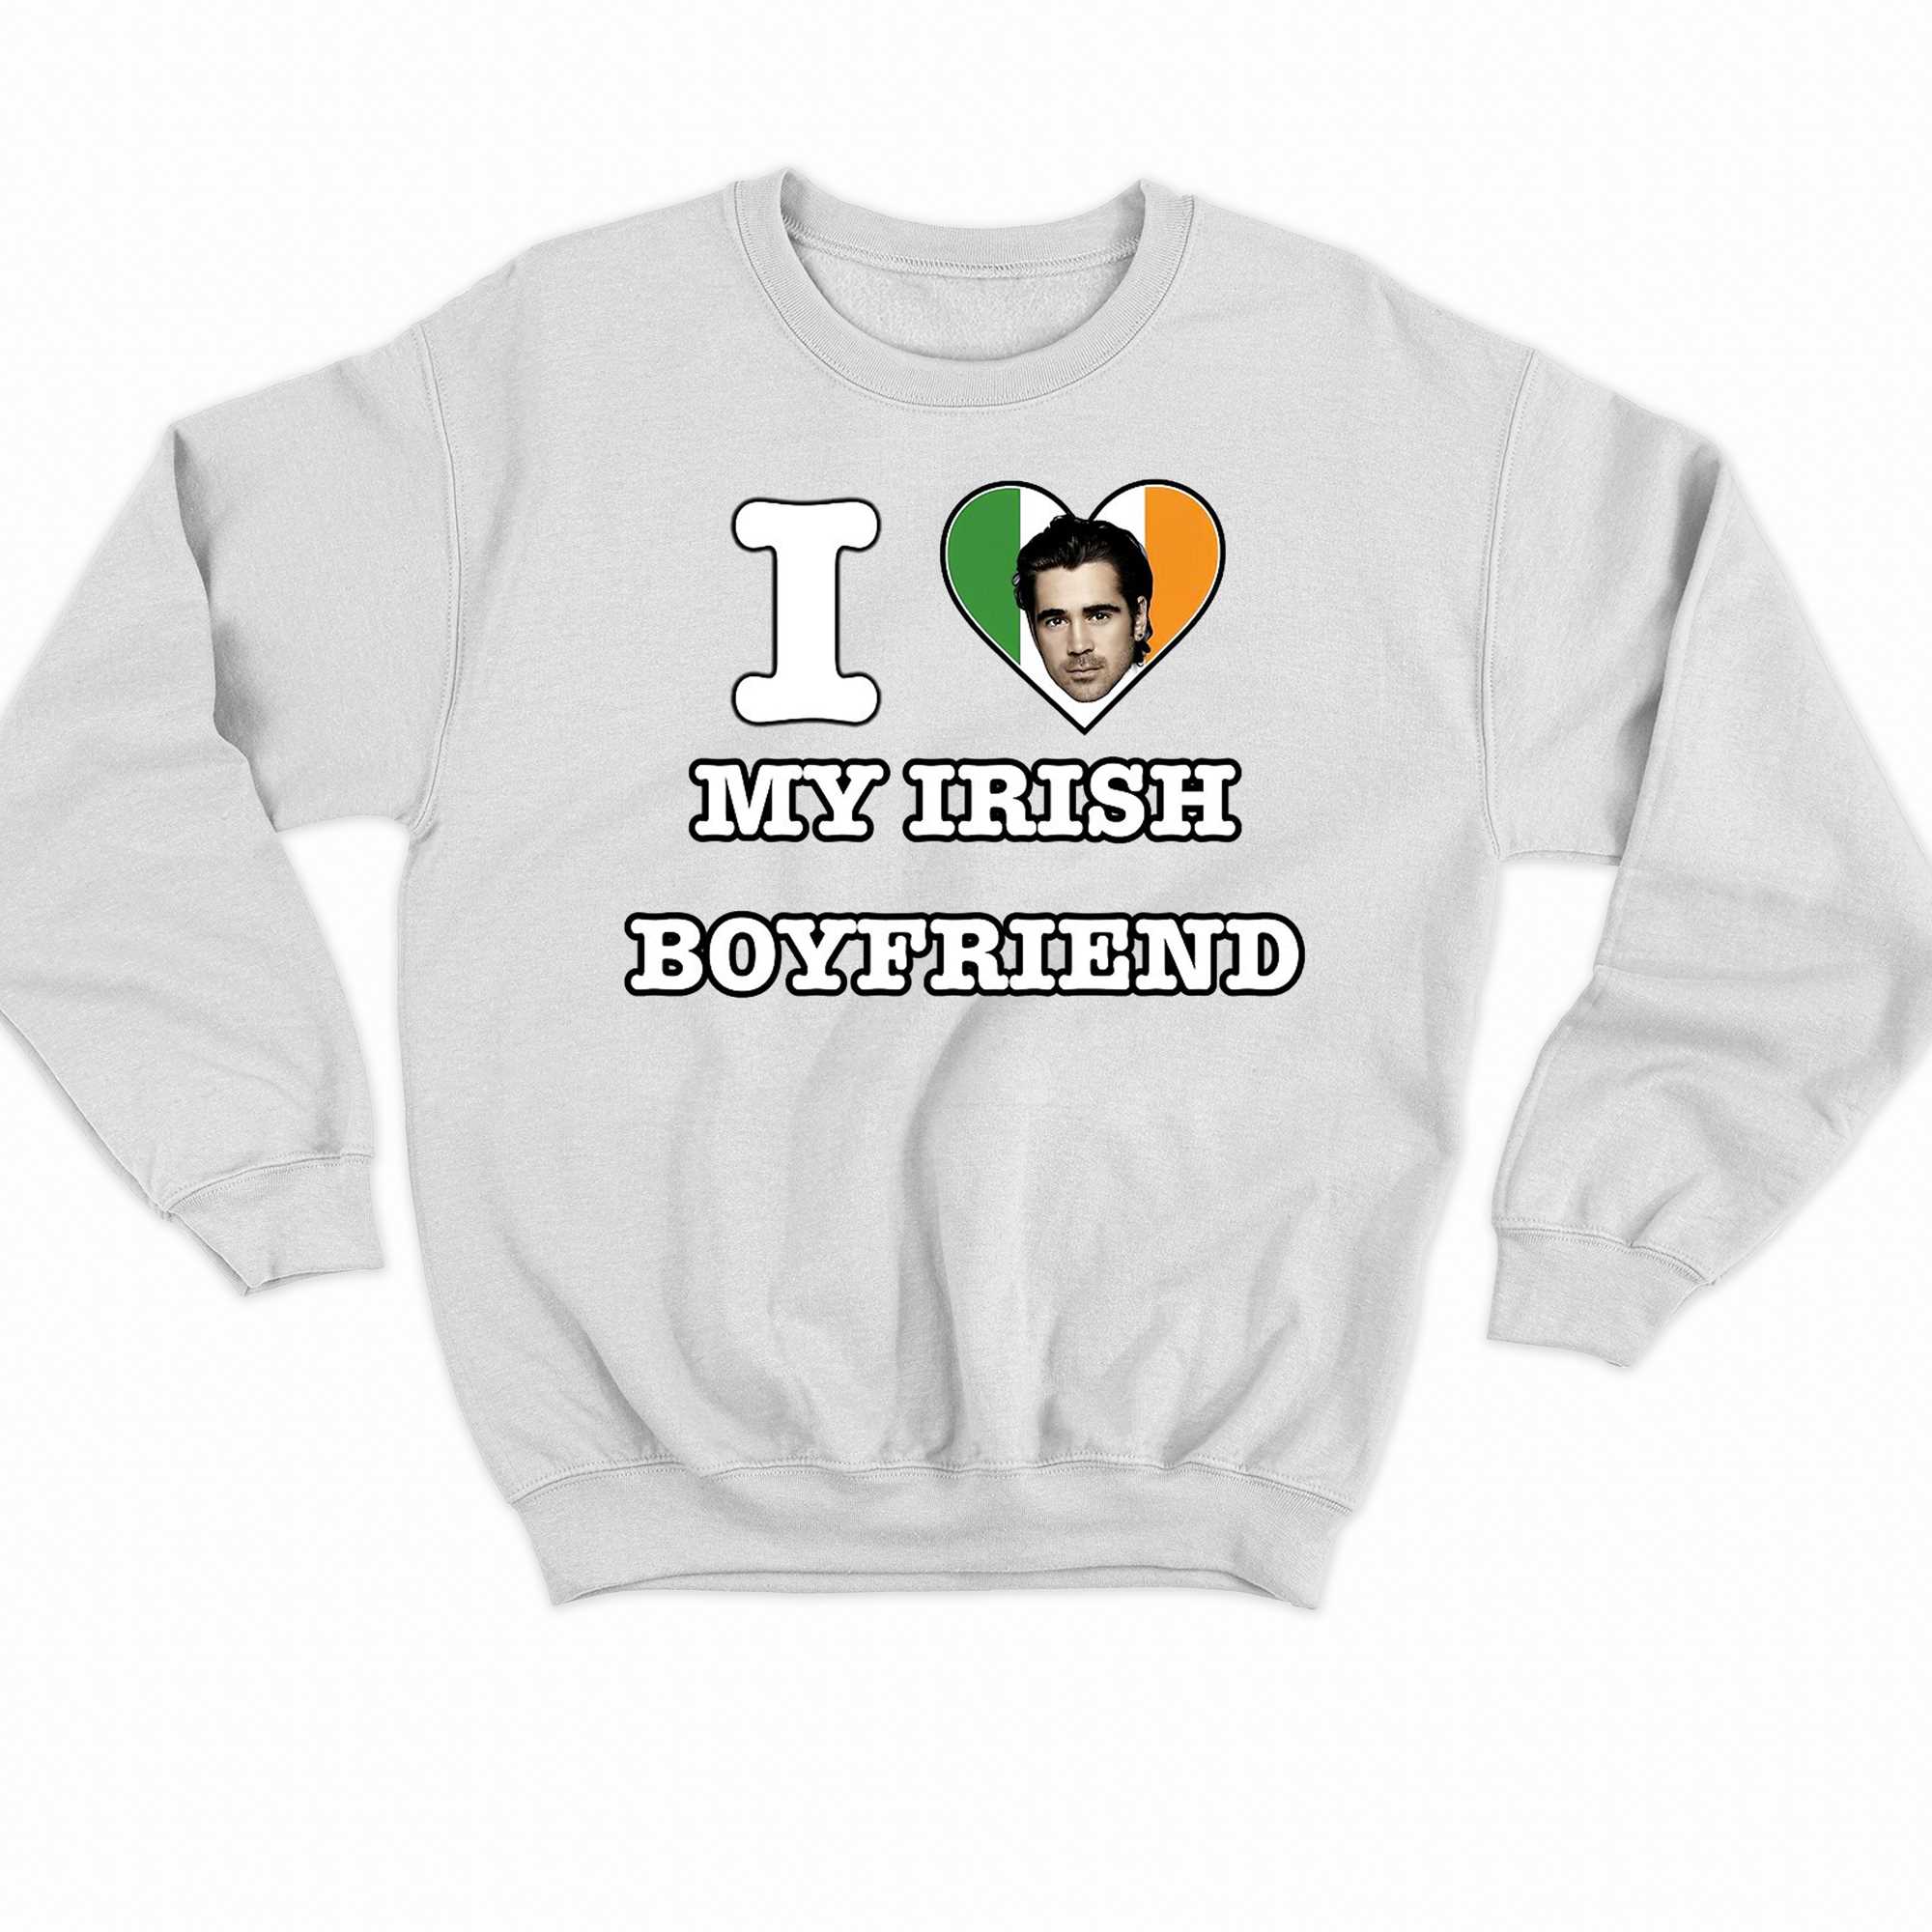 Colin Farrell Irish Boyfriend T-shirt 